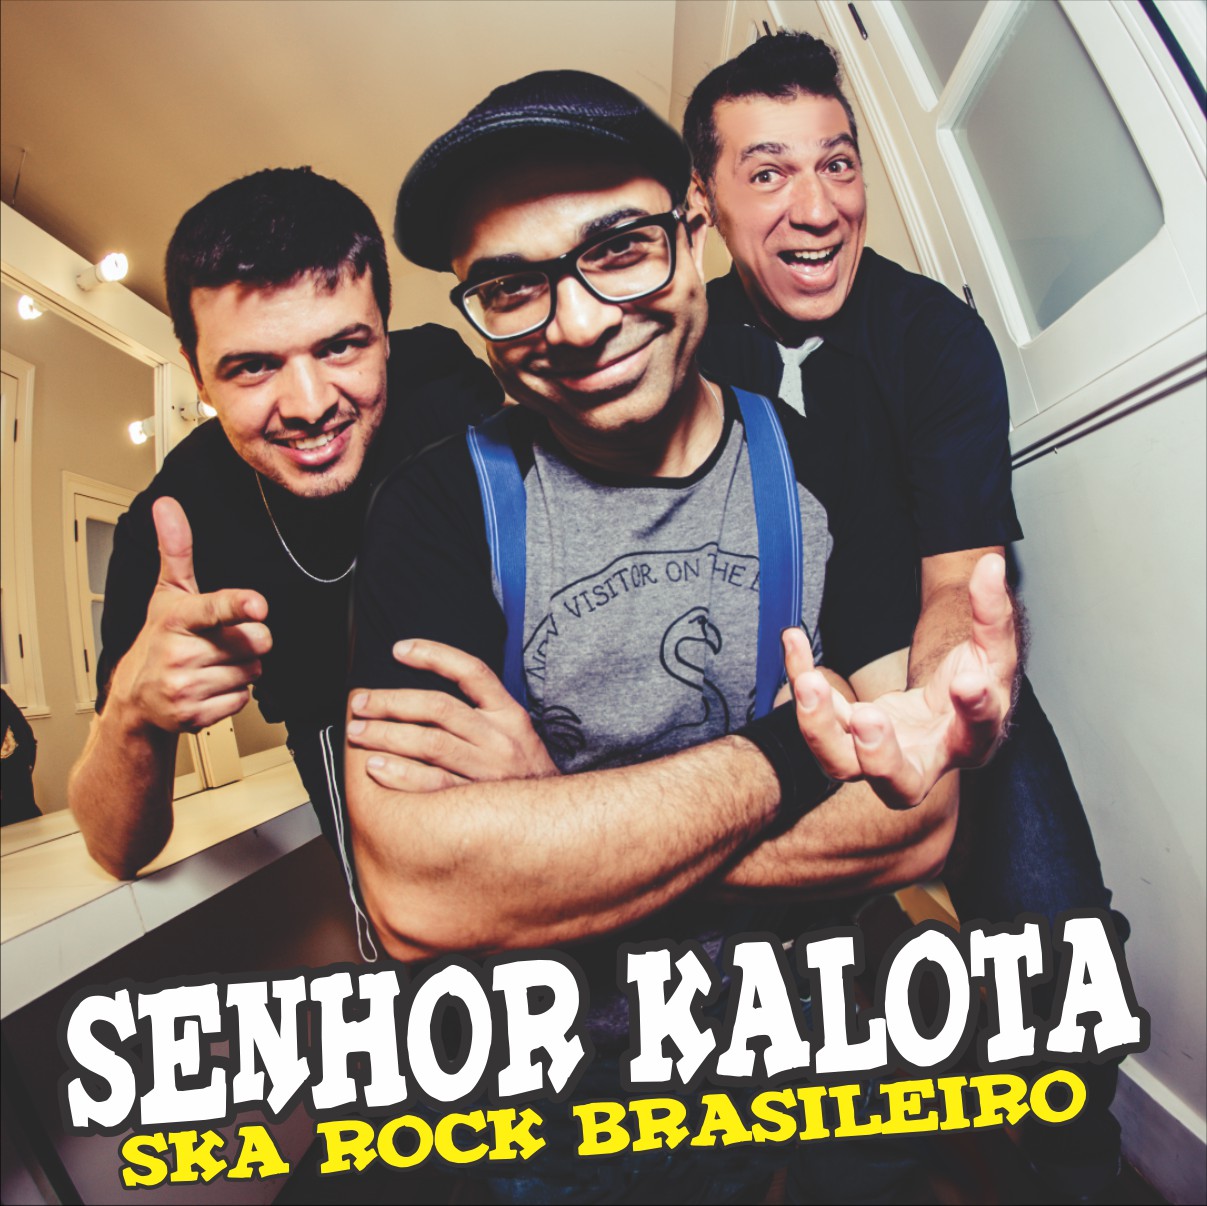 banda autoral de SKA ROCK BRASILEIRO! SENHOR KALOTA